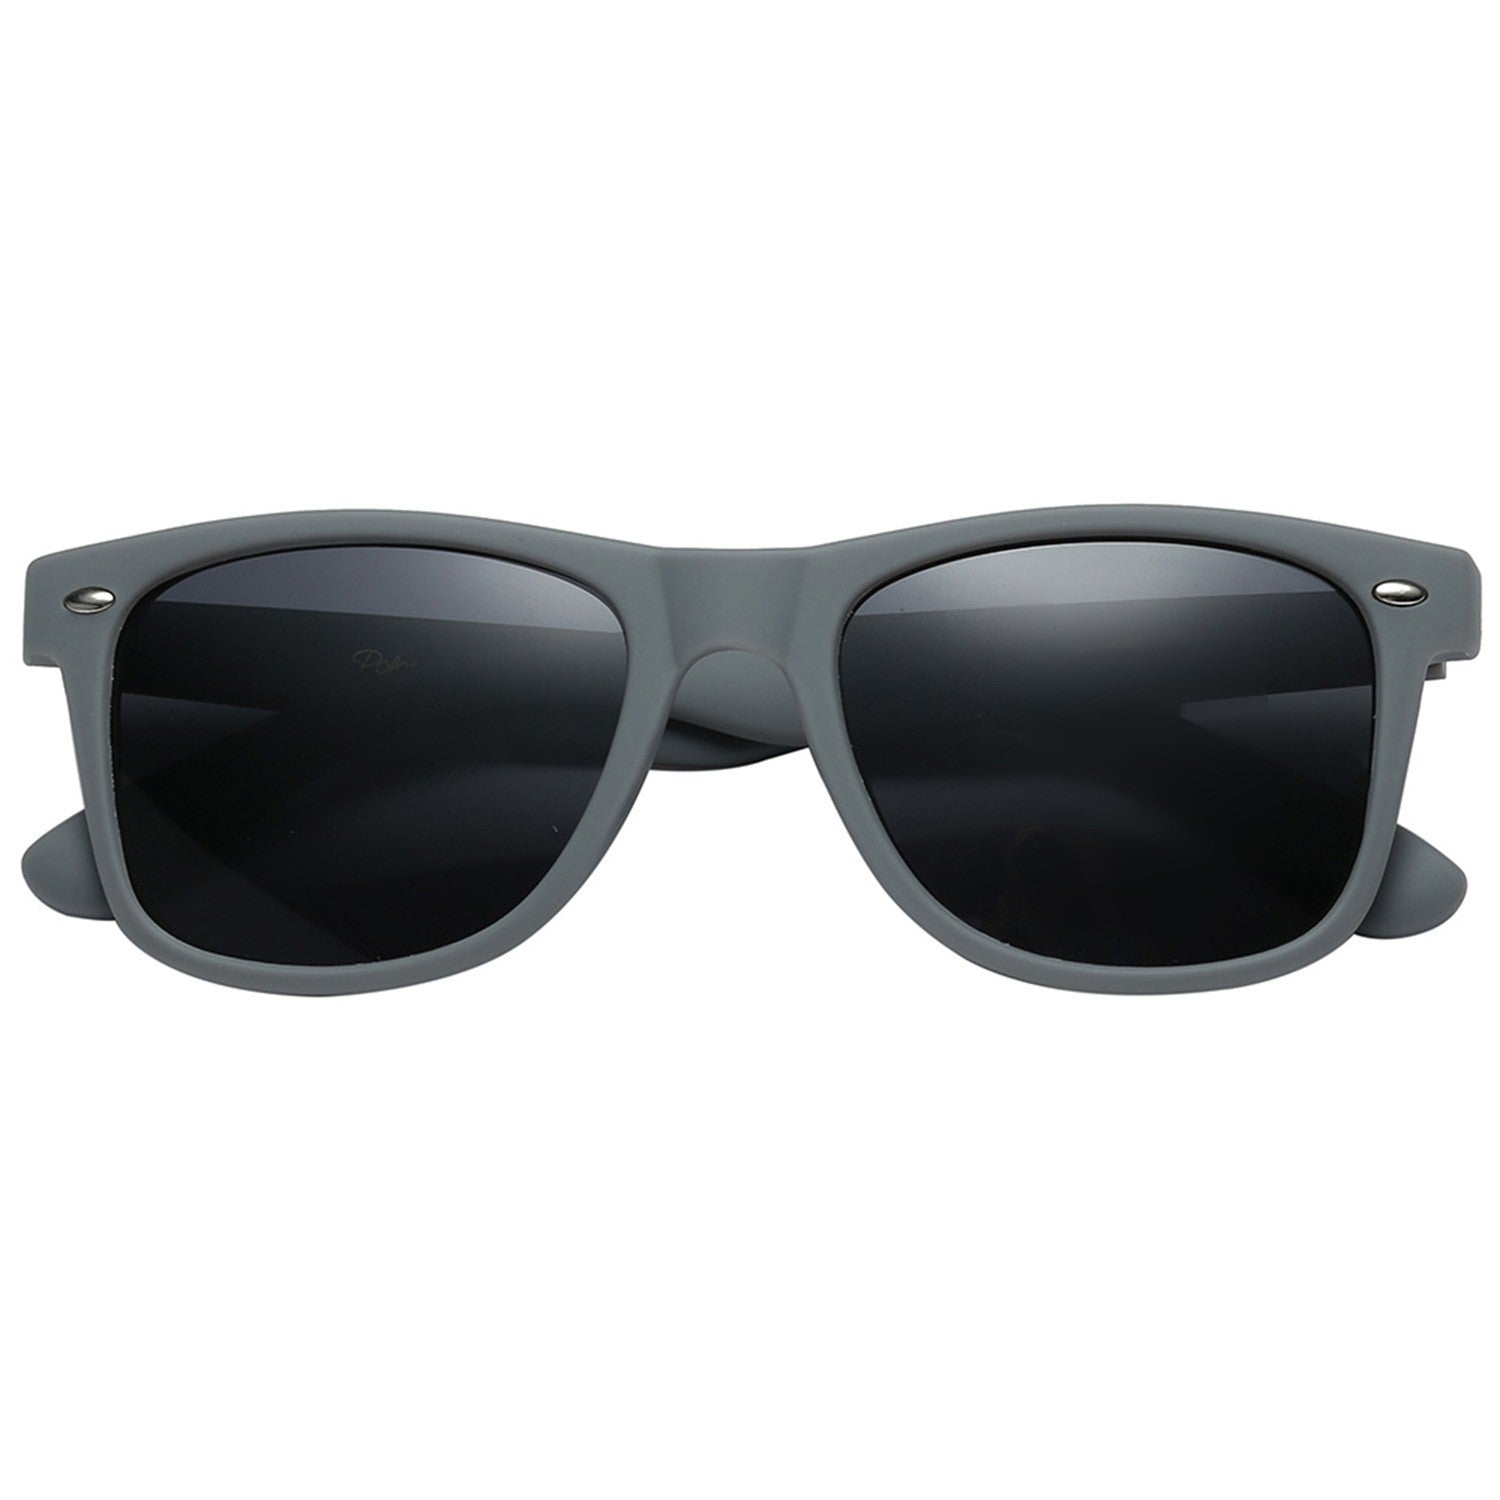 Polarspex Polarized 80's Retro Style Unisex Sunglasses with Wolf Grey Frames and Smoke Lenses